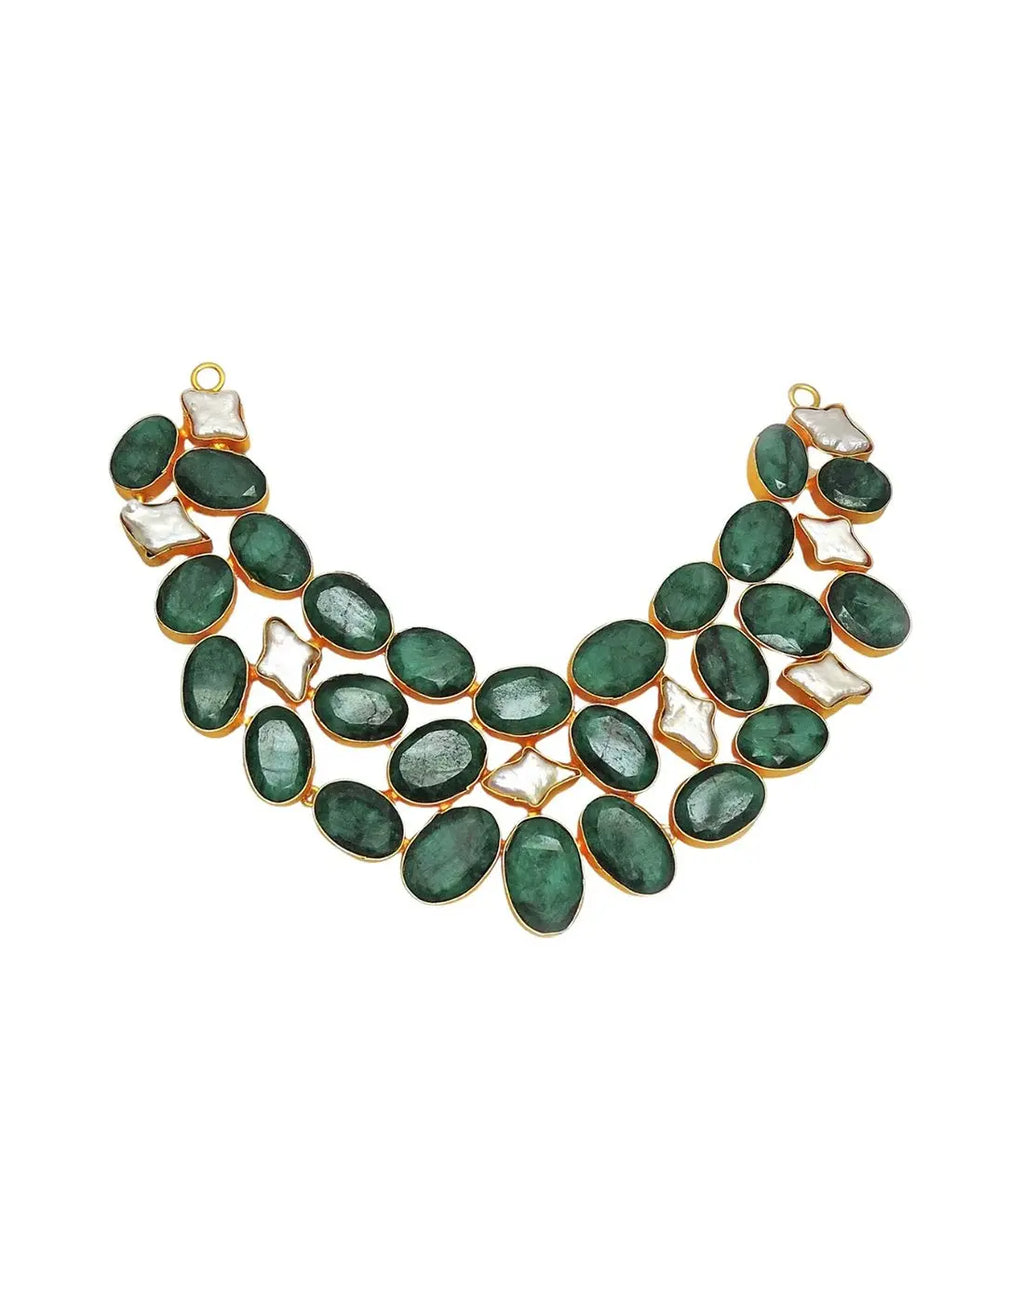 Mes Statement Bib (Emerald)- Handcrafted Jewellery from Dori